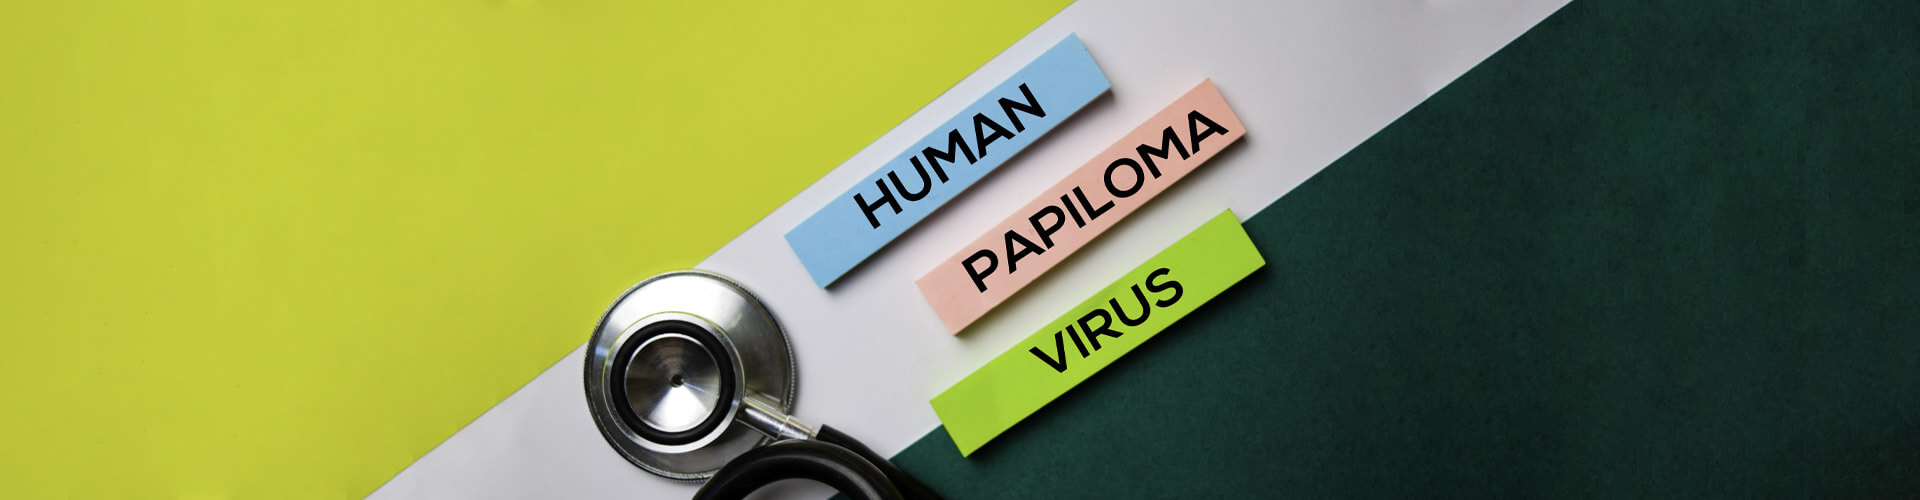 Pisani Medical Group | Screening Papilloma virus